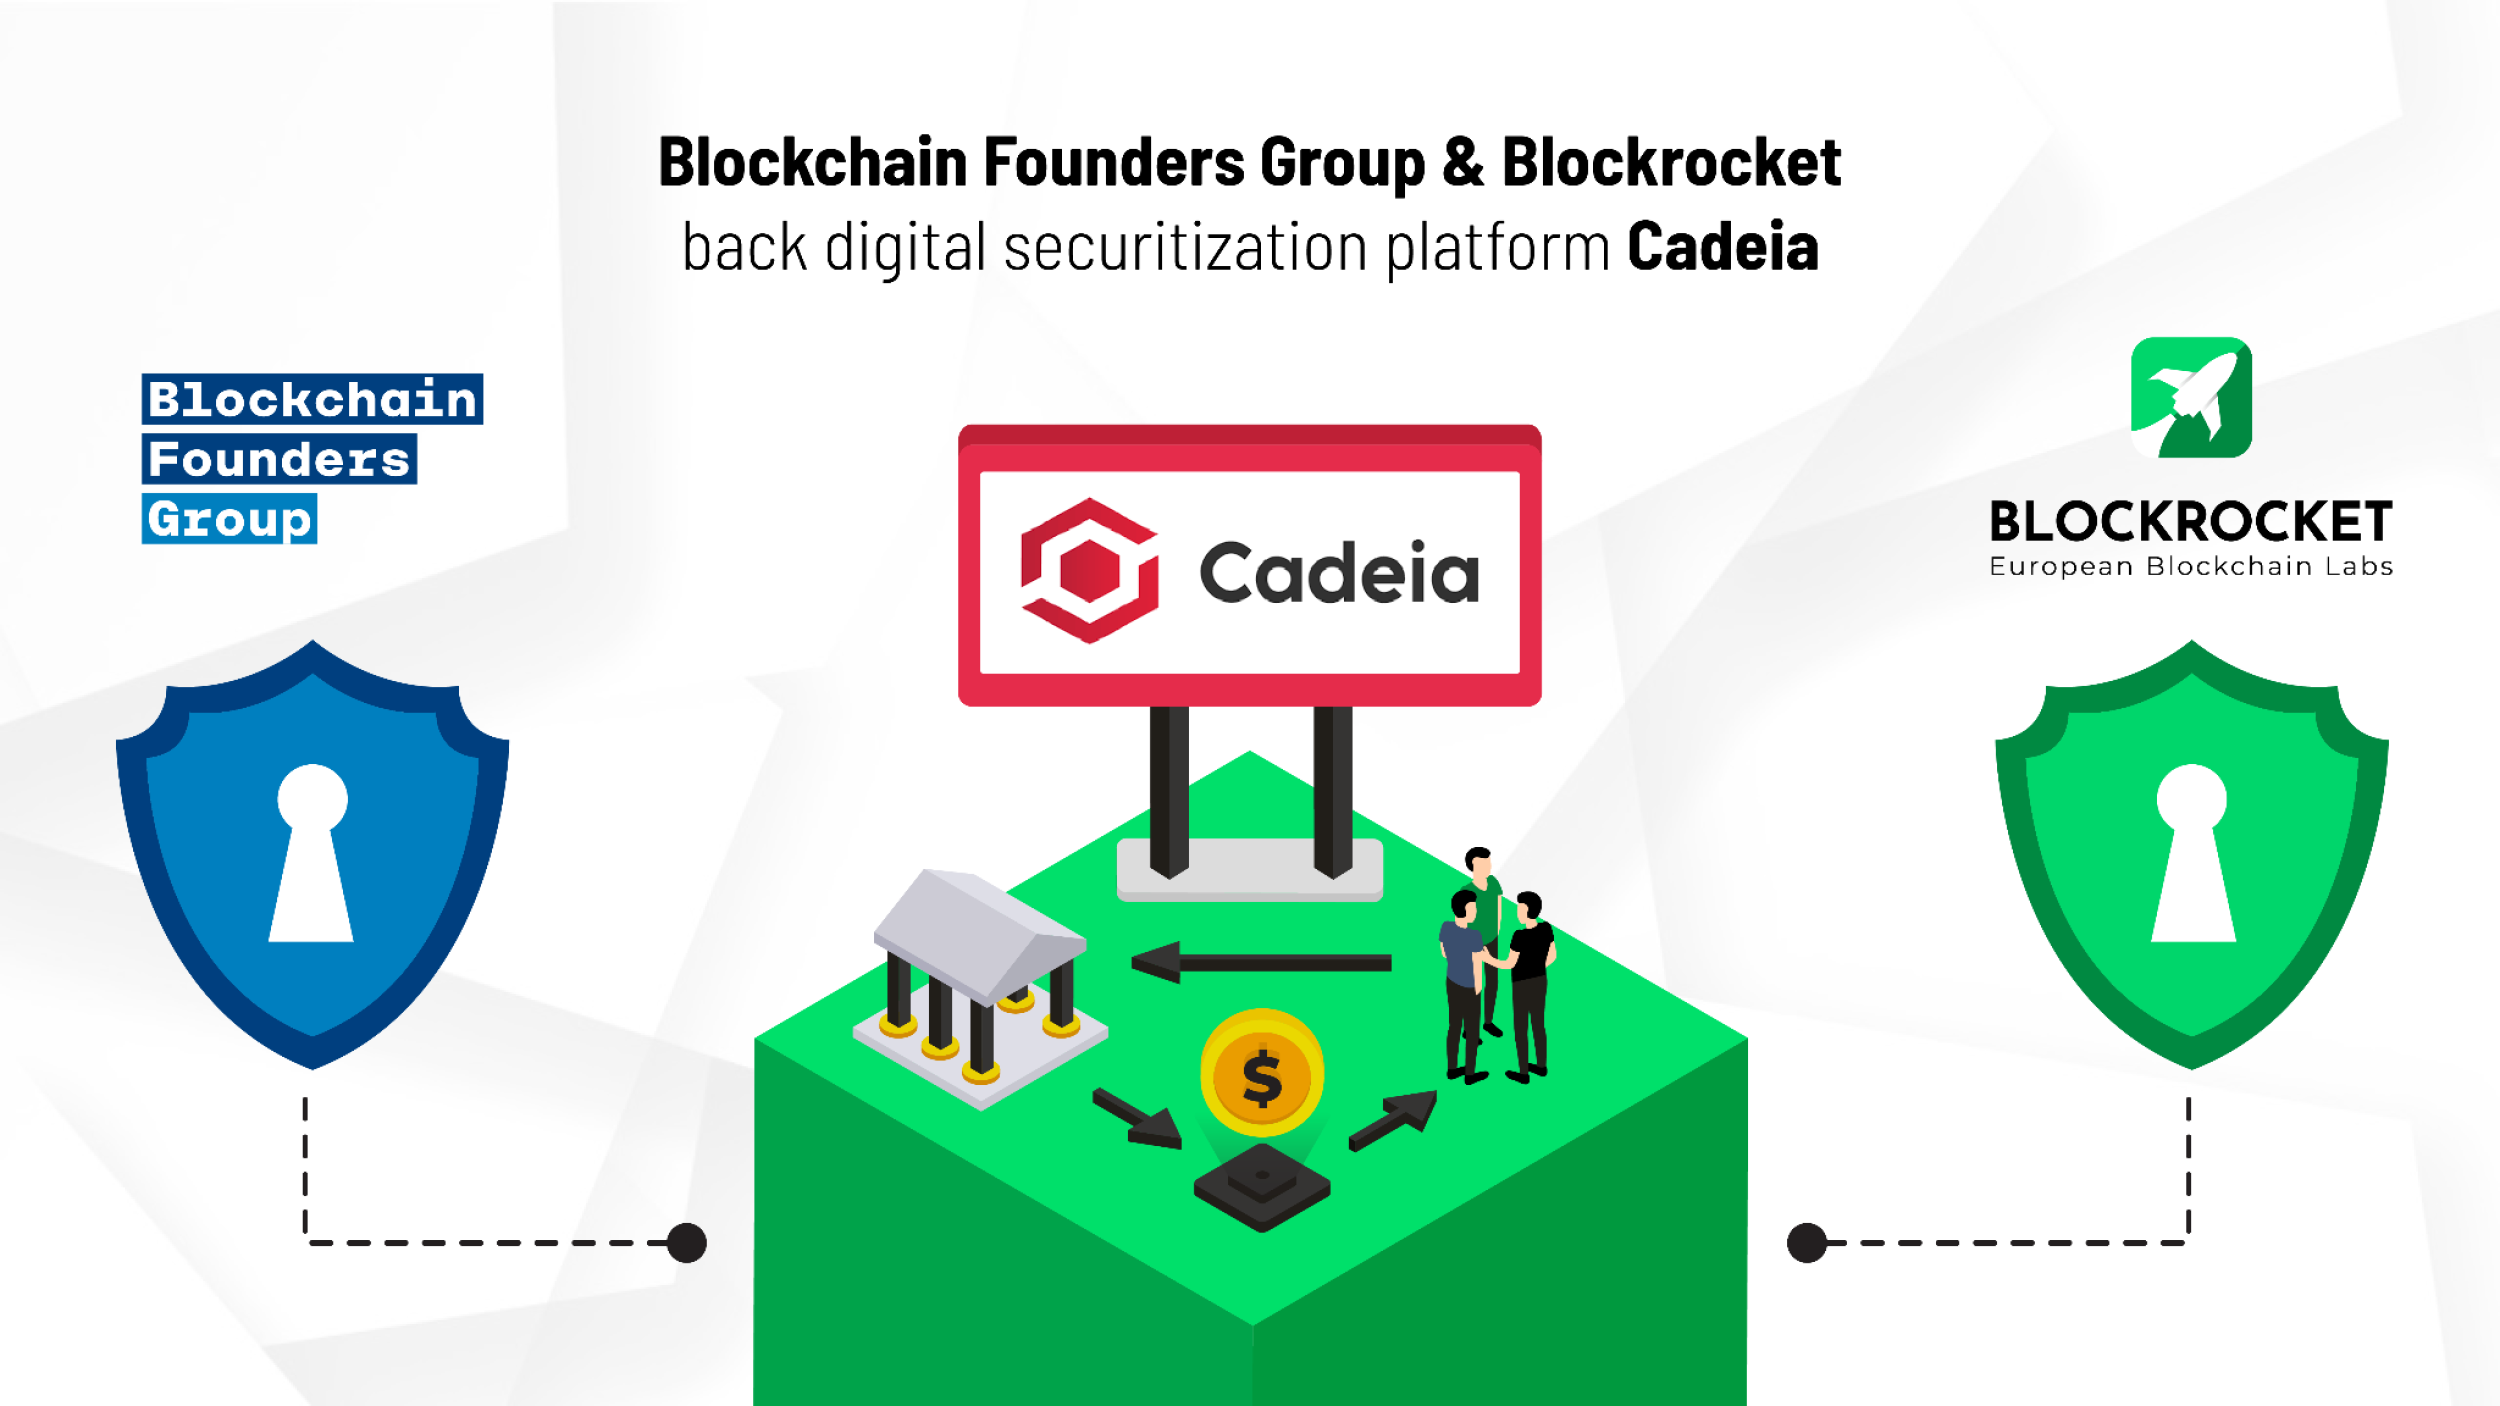 Investment in digital securitization platform Cadeia